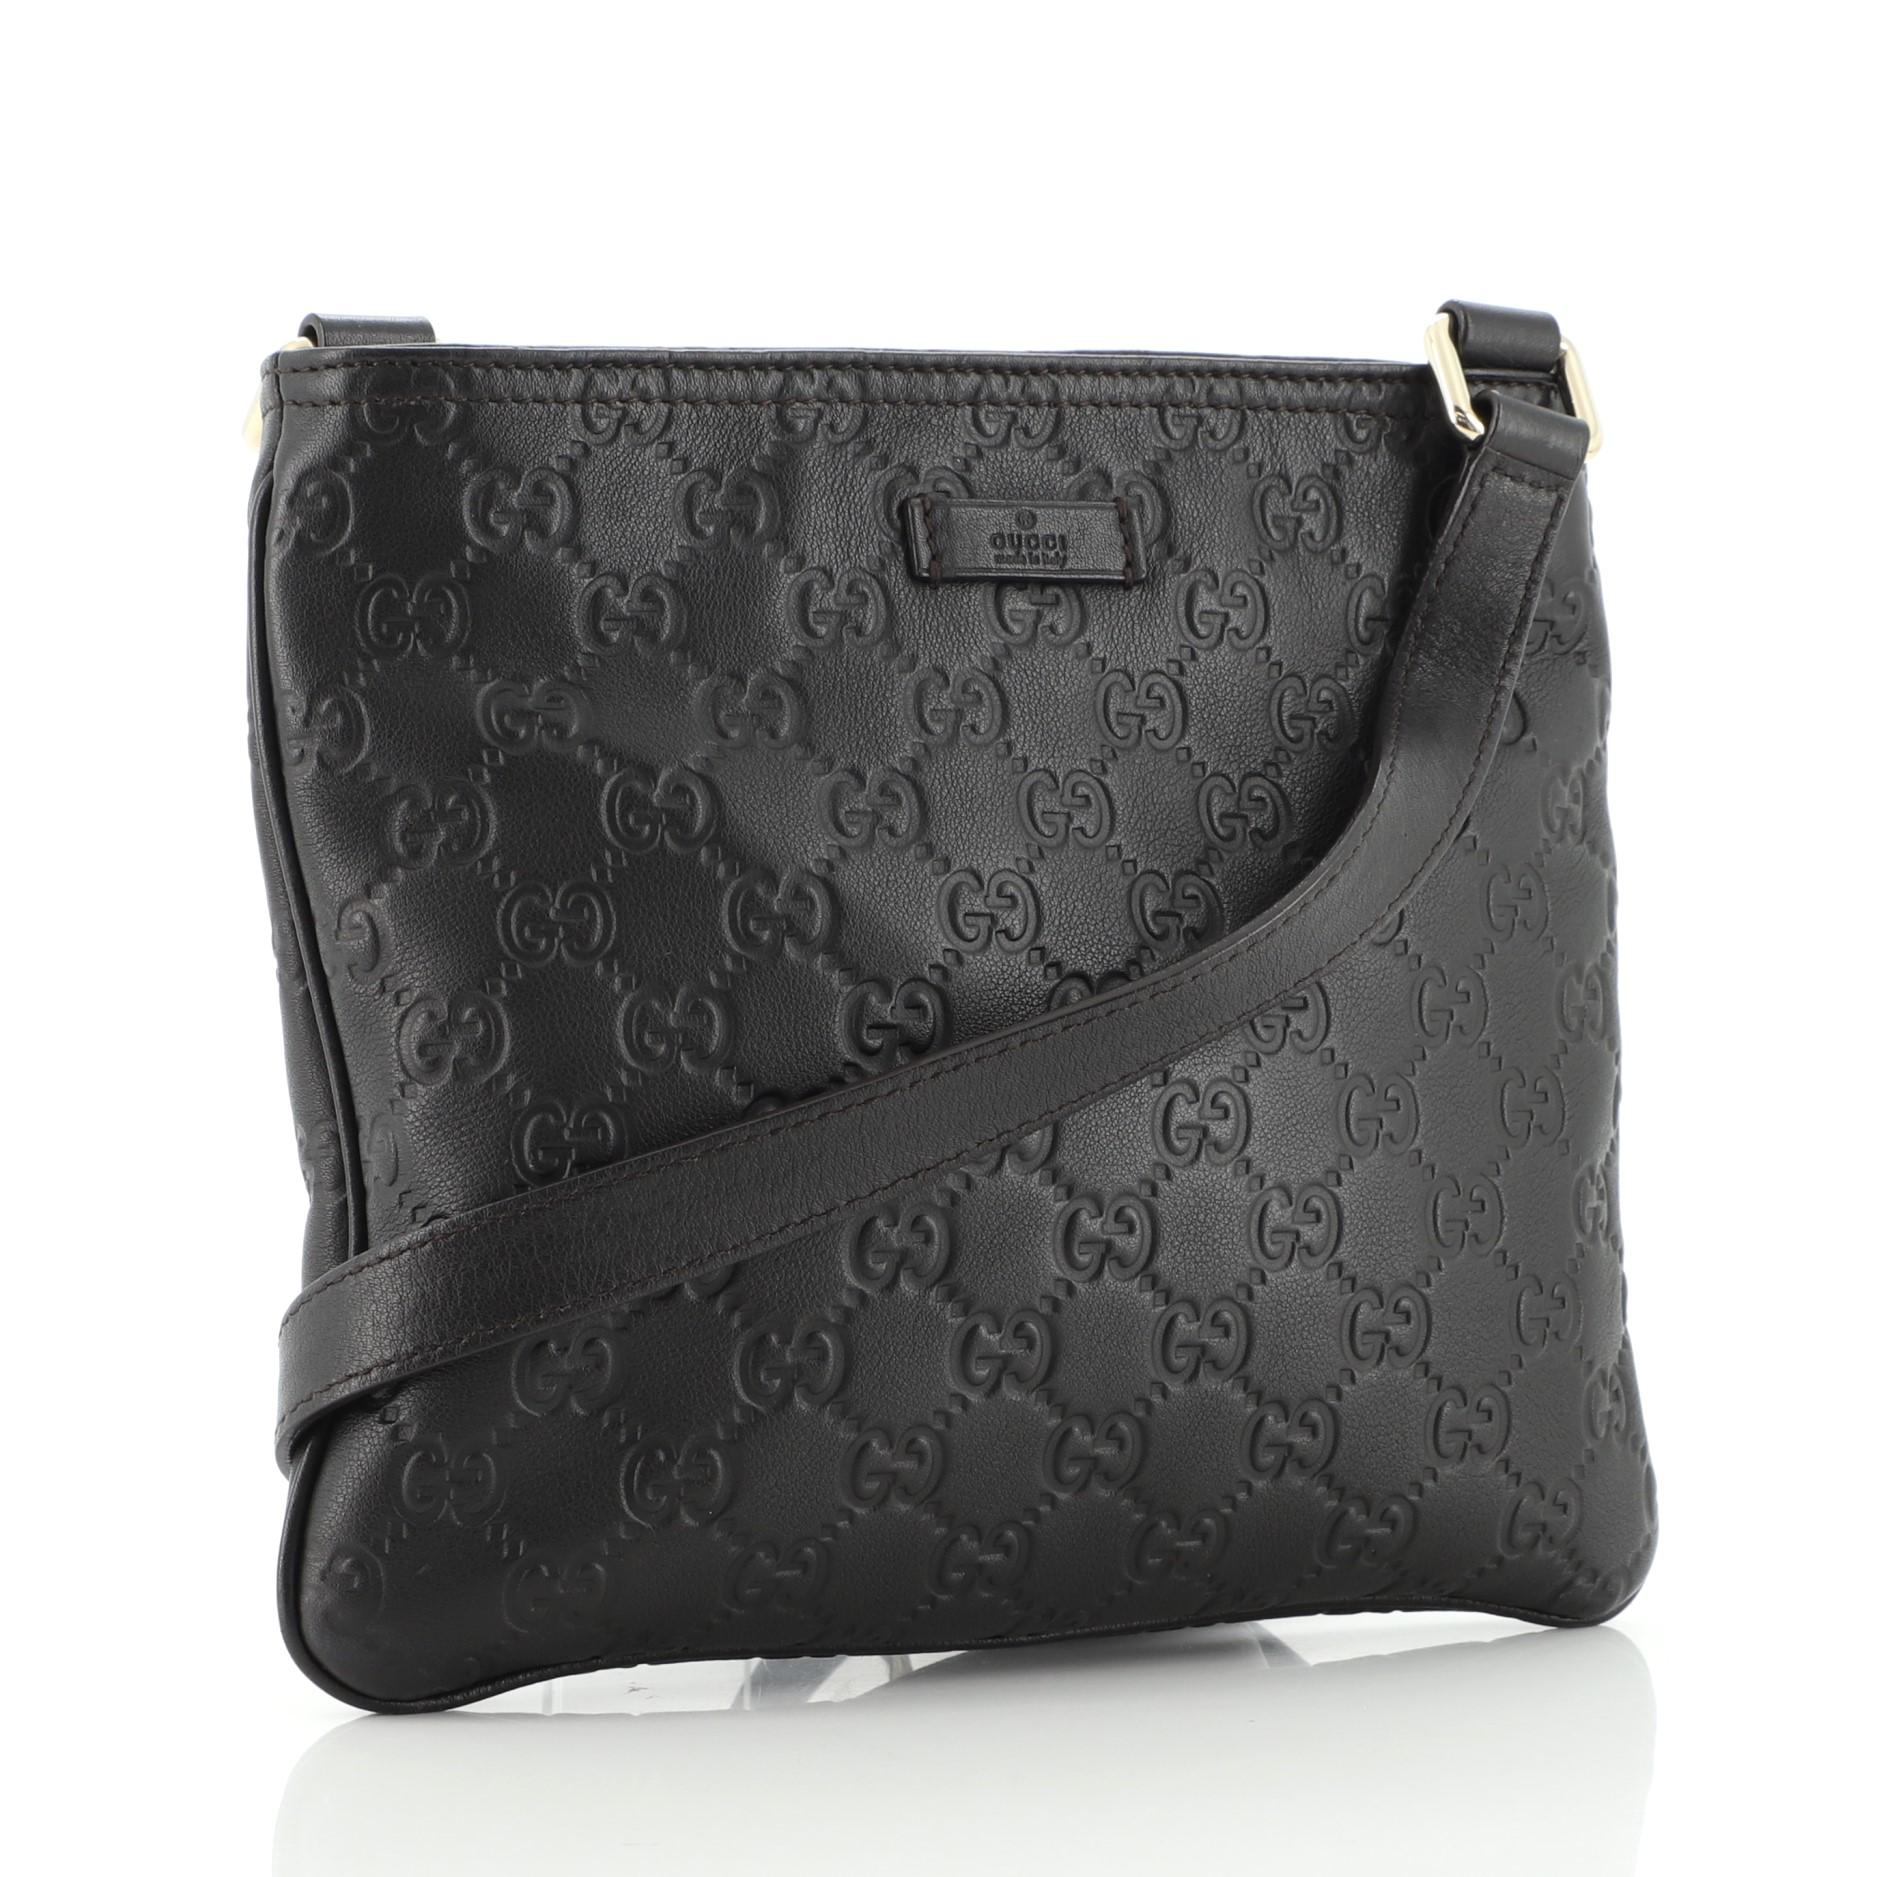 Black Gucci Zip Top Messenger Bag Guccissima Leather Small